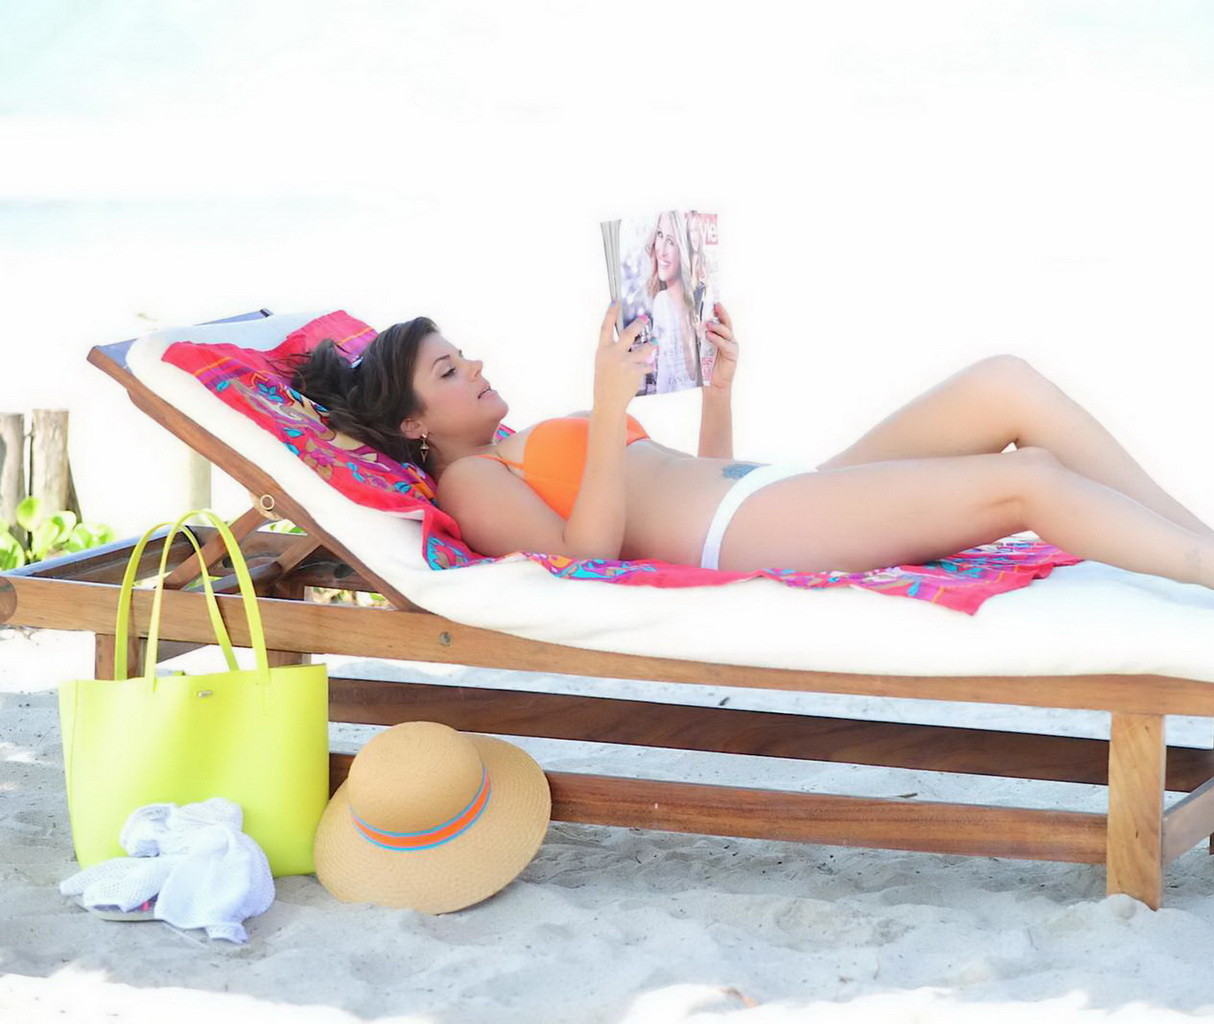 Tiffani thiessen con un bikini naranja y una braguita blanca en la playa de México
 #75205404